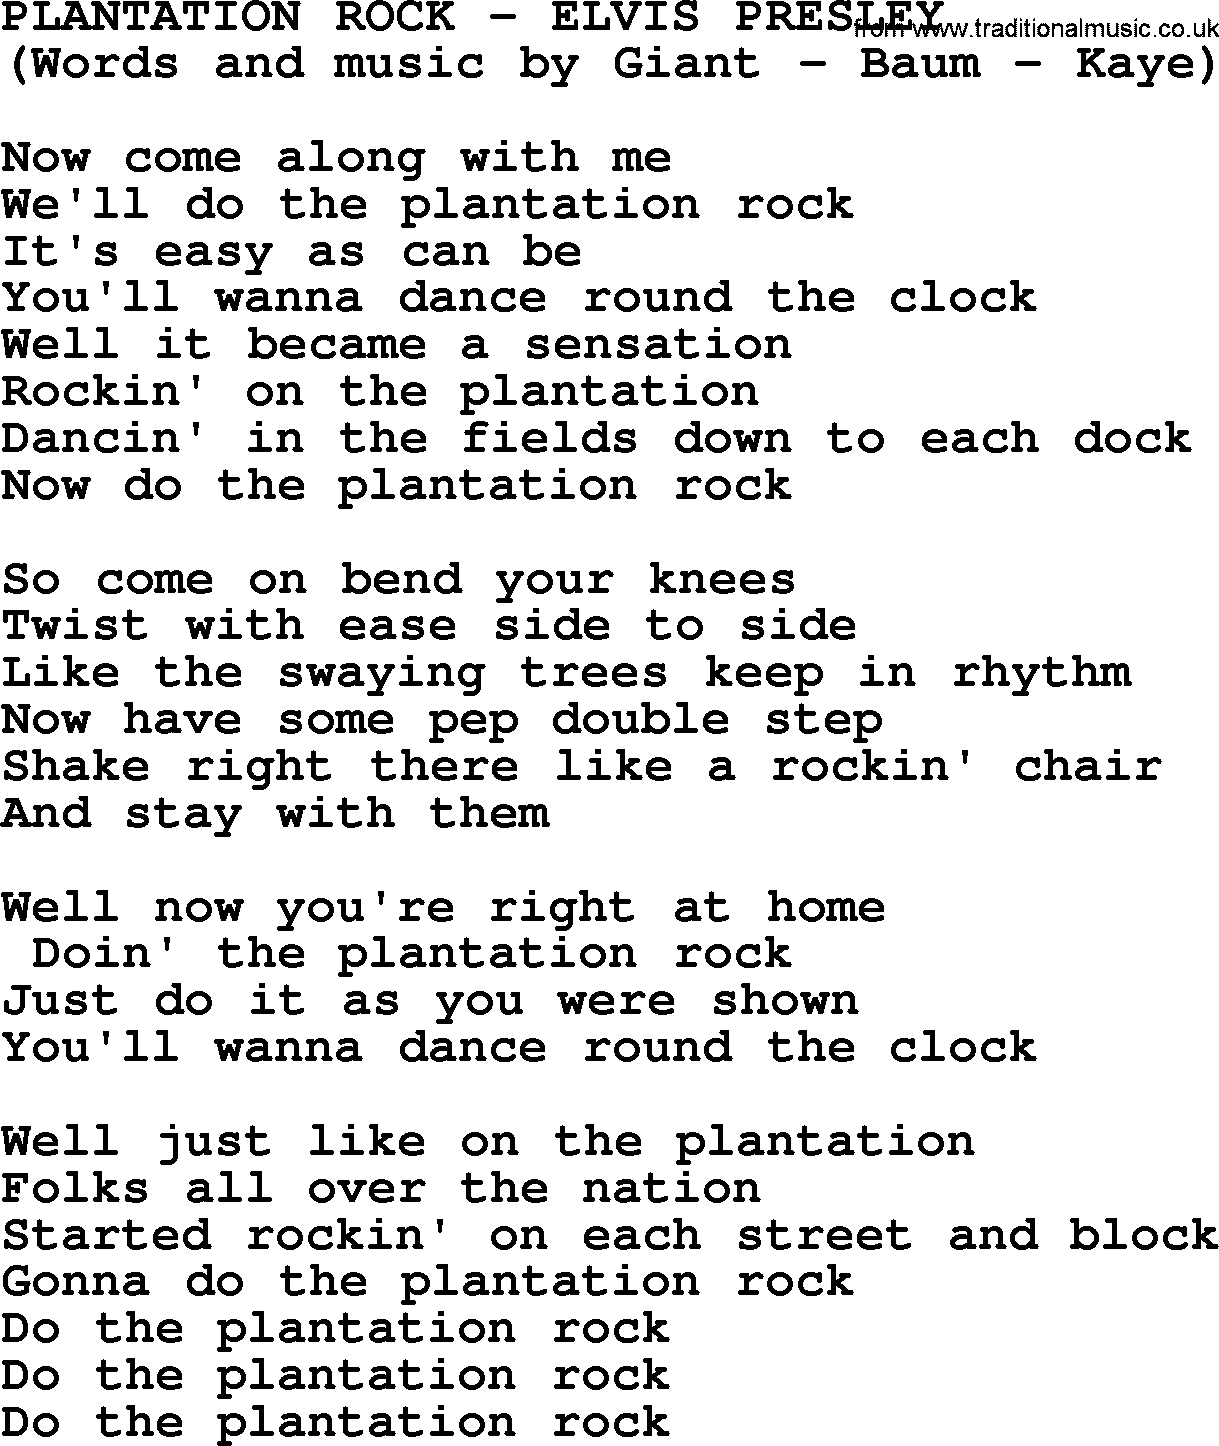 Elvis Presley song: Plantation Rock lyrics